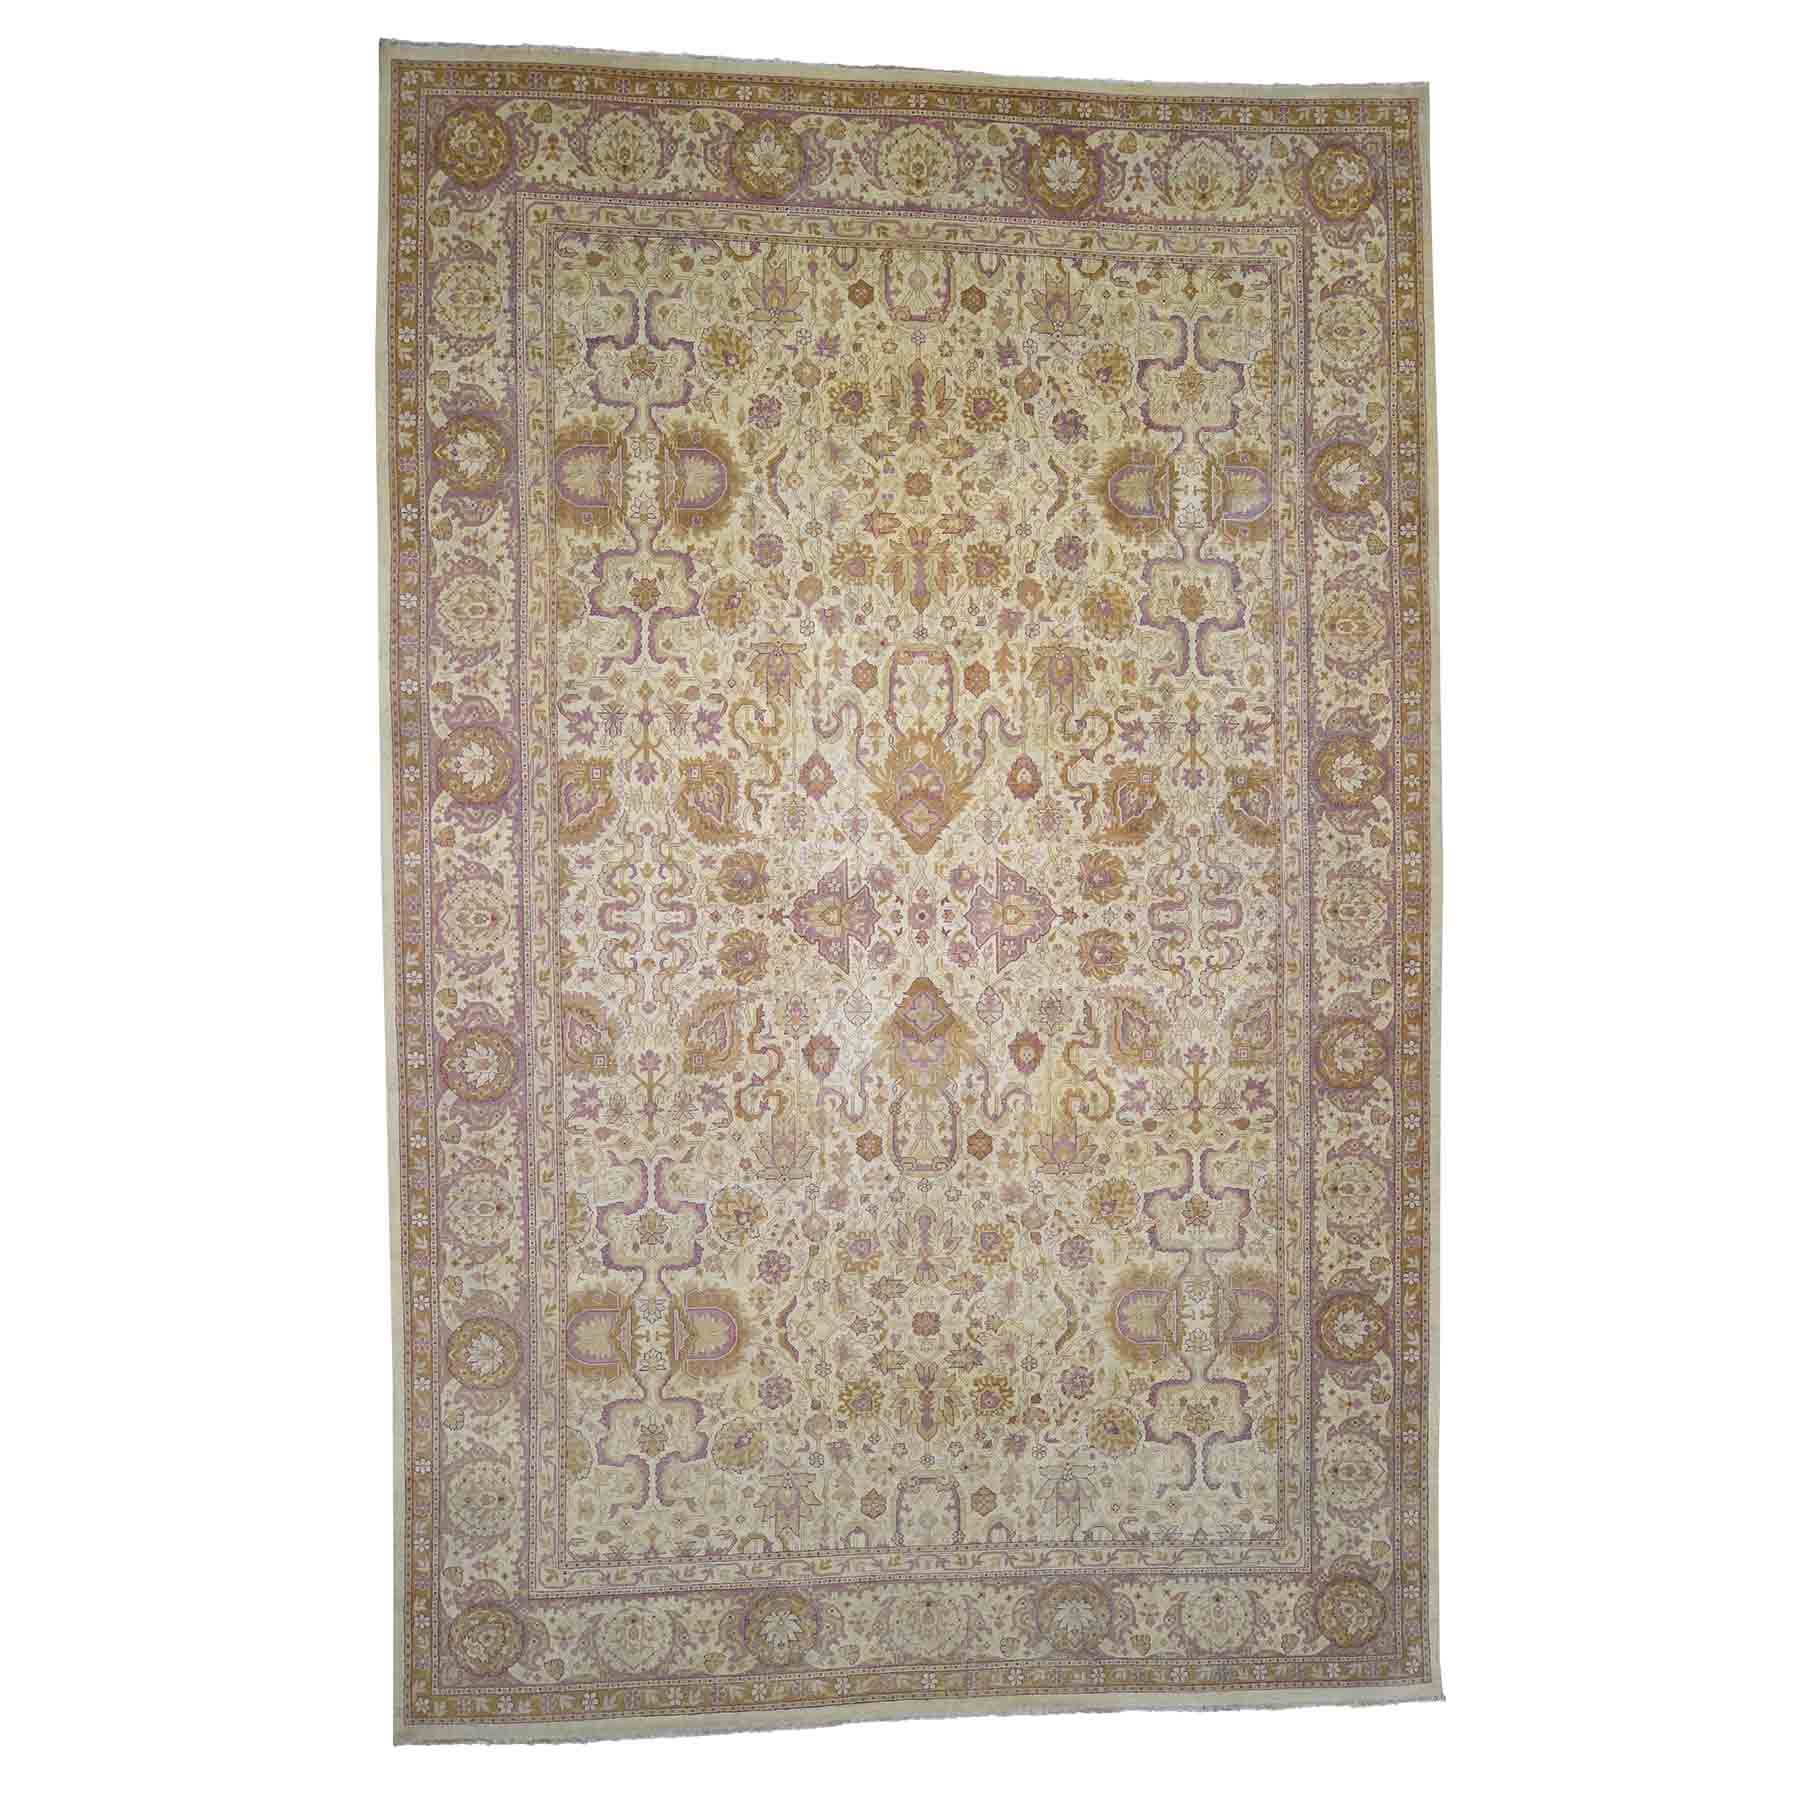 10'7"x16'4" Beige Antique Mughal Amritsar Good Condition Even Wear Hand Woven Oriental Oversize Rug 